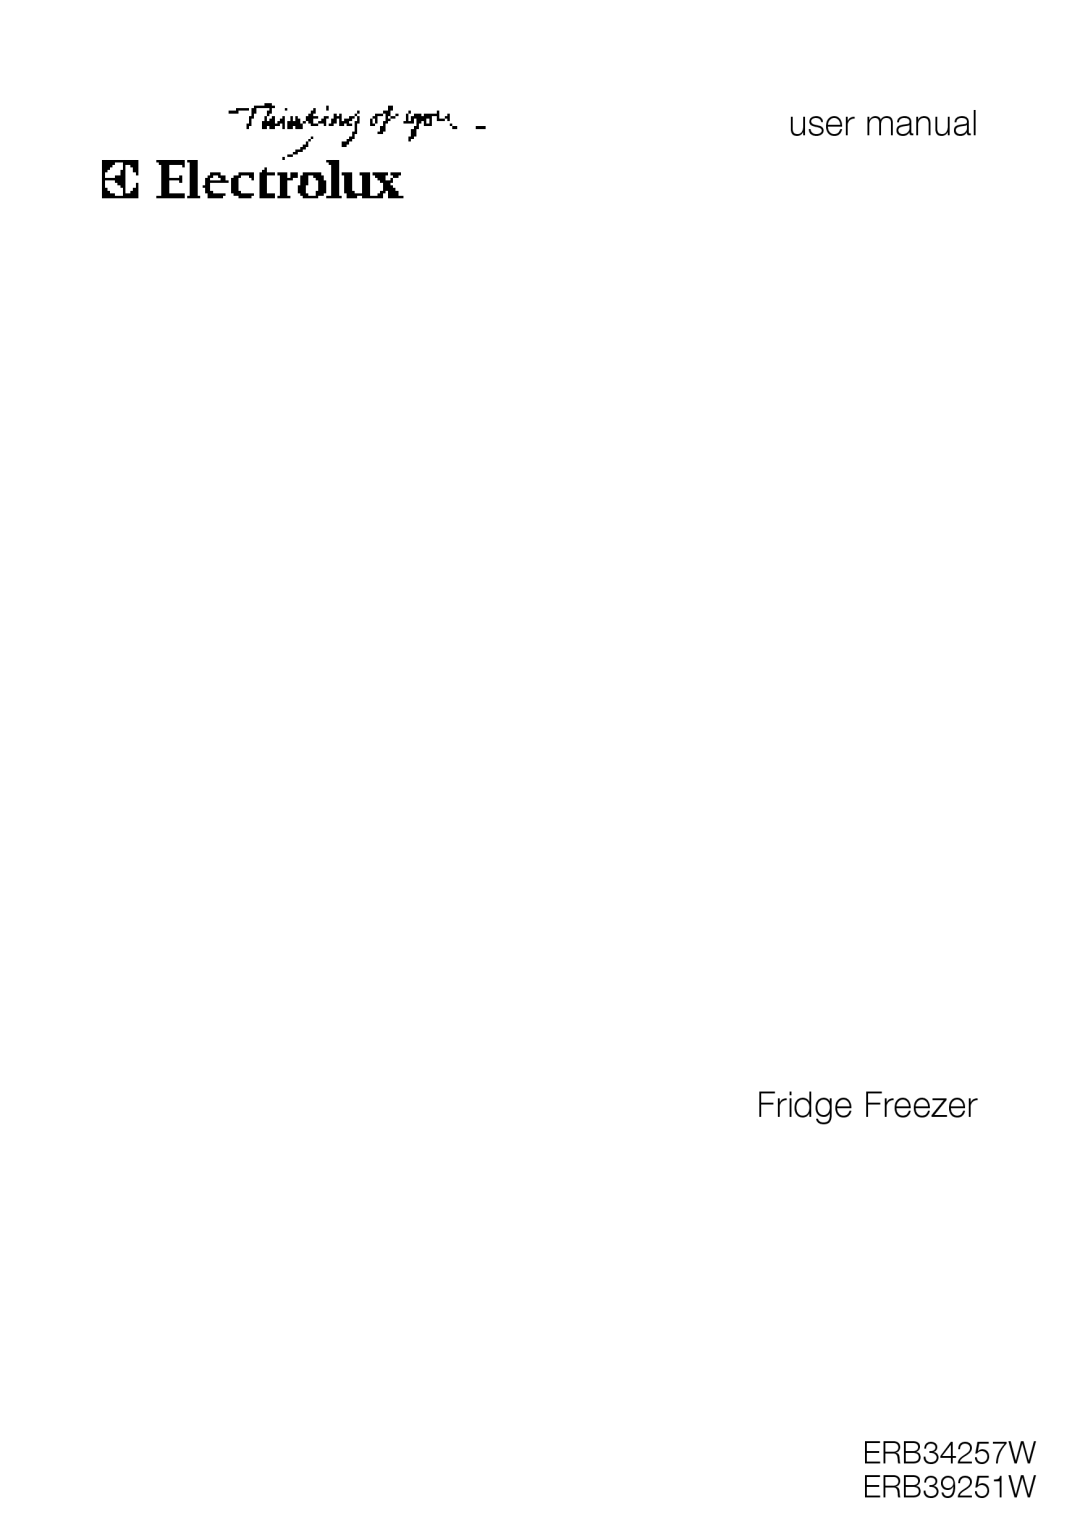 Electrolux user manual Fridge Freezer, ERB34257W ERB39251W 